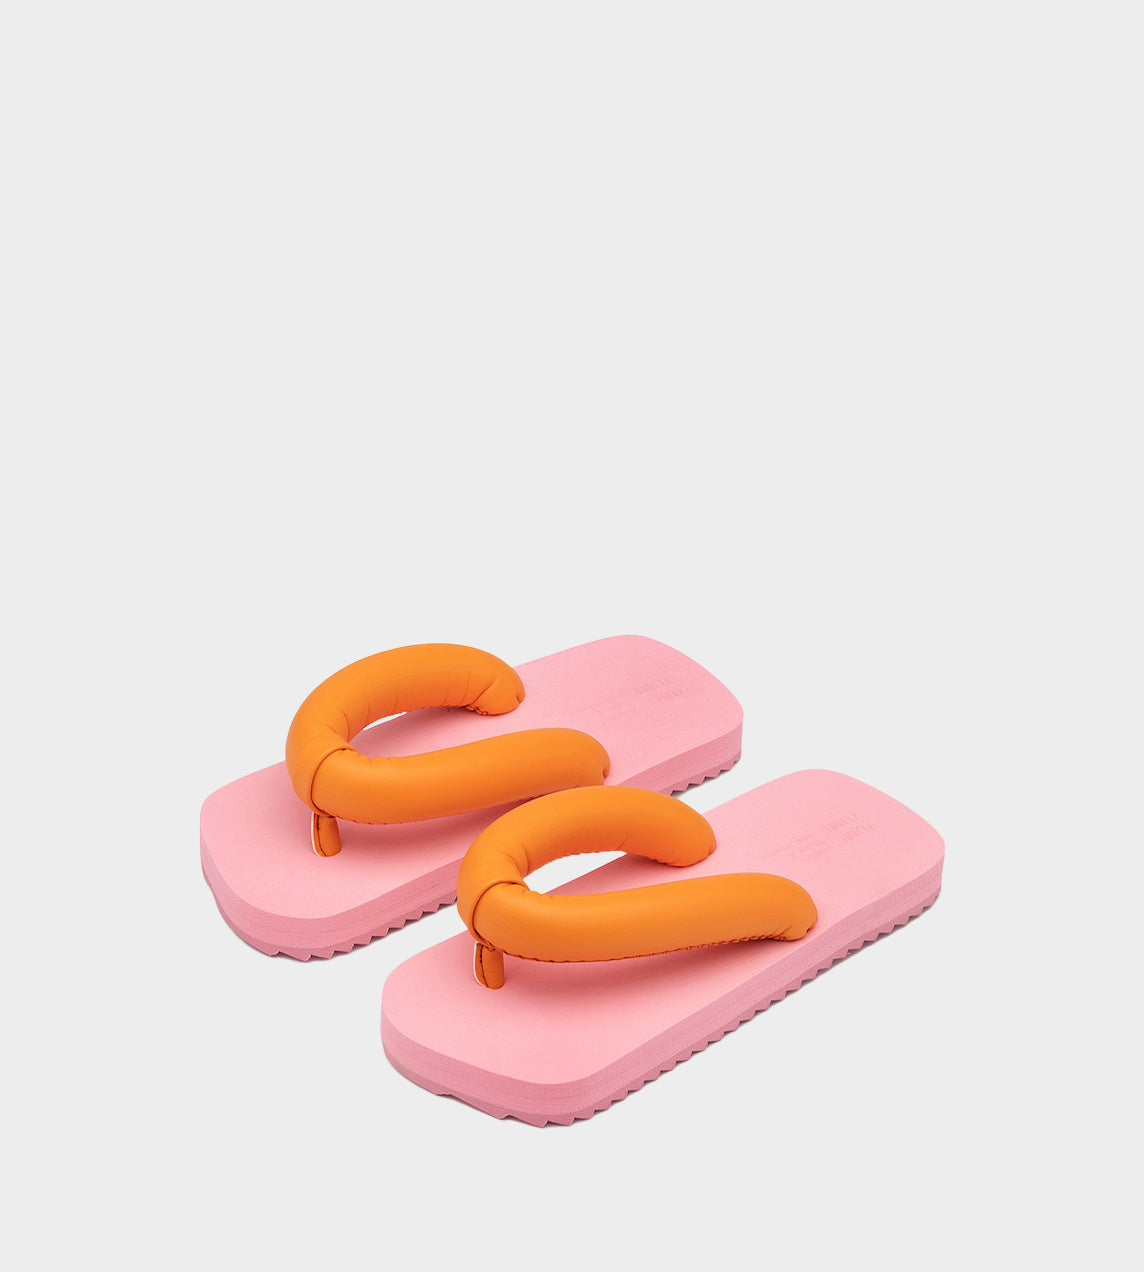 Yume Yume - Suki Flip Flop Orange/Pink